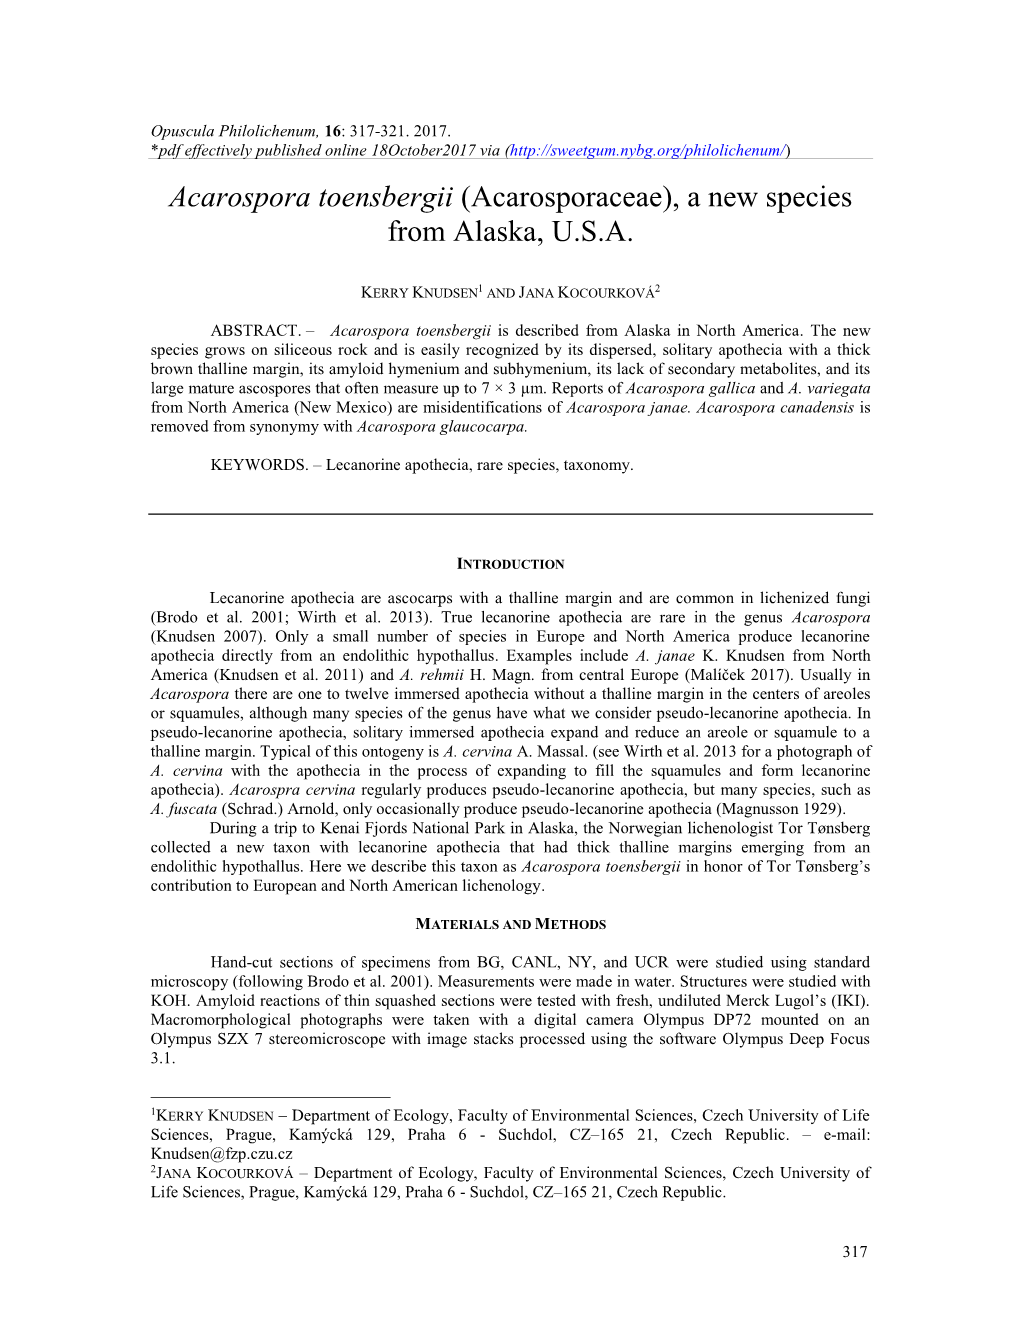 Acarospora Toensbergii (Acarosporaceae), a New Species from Alaska, U.S.A